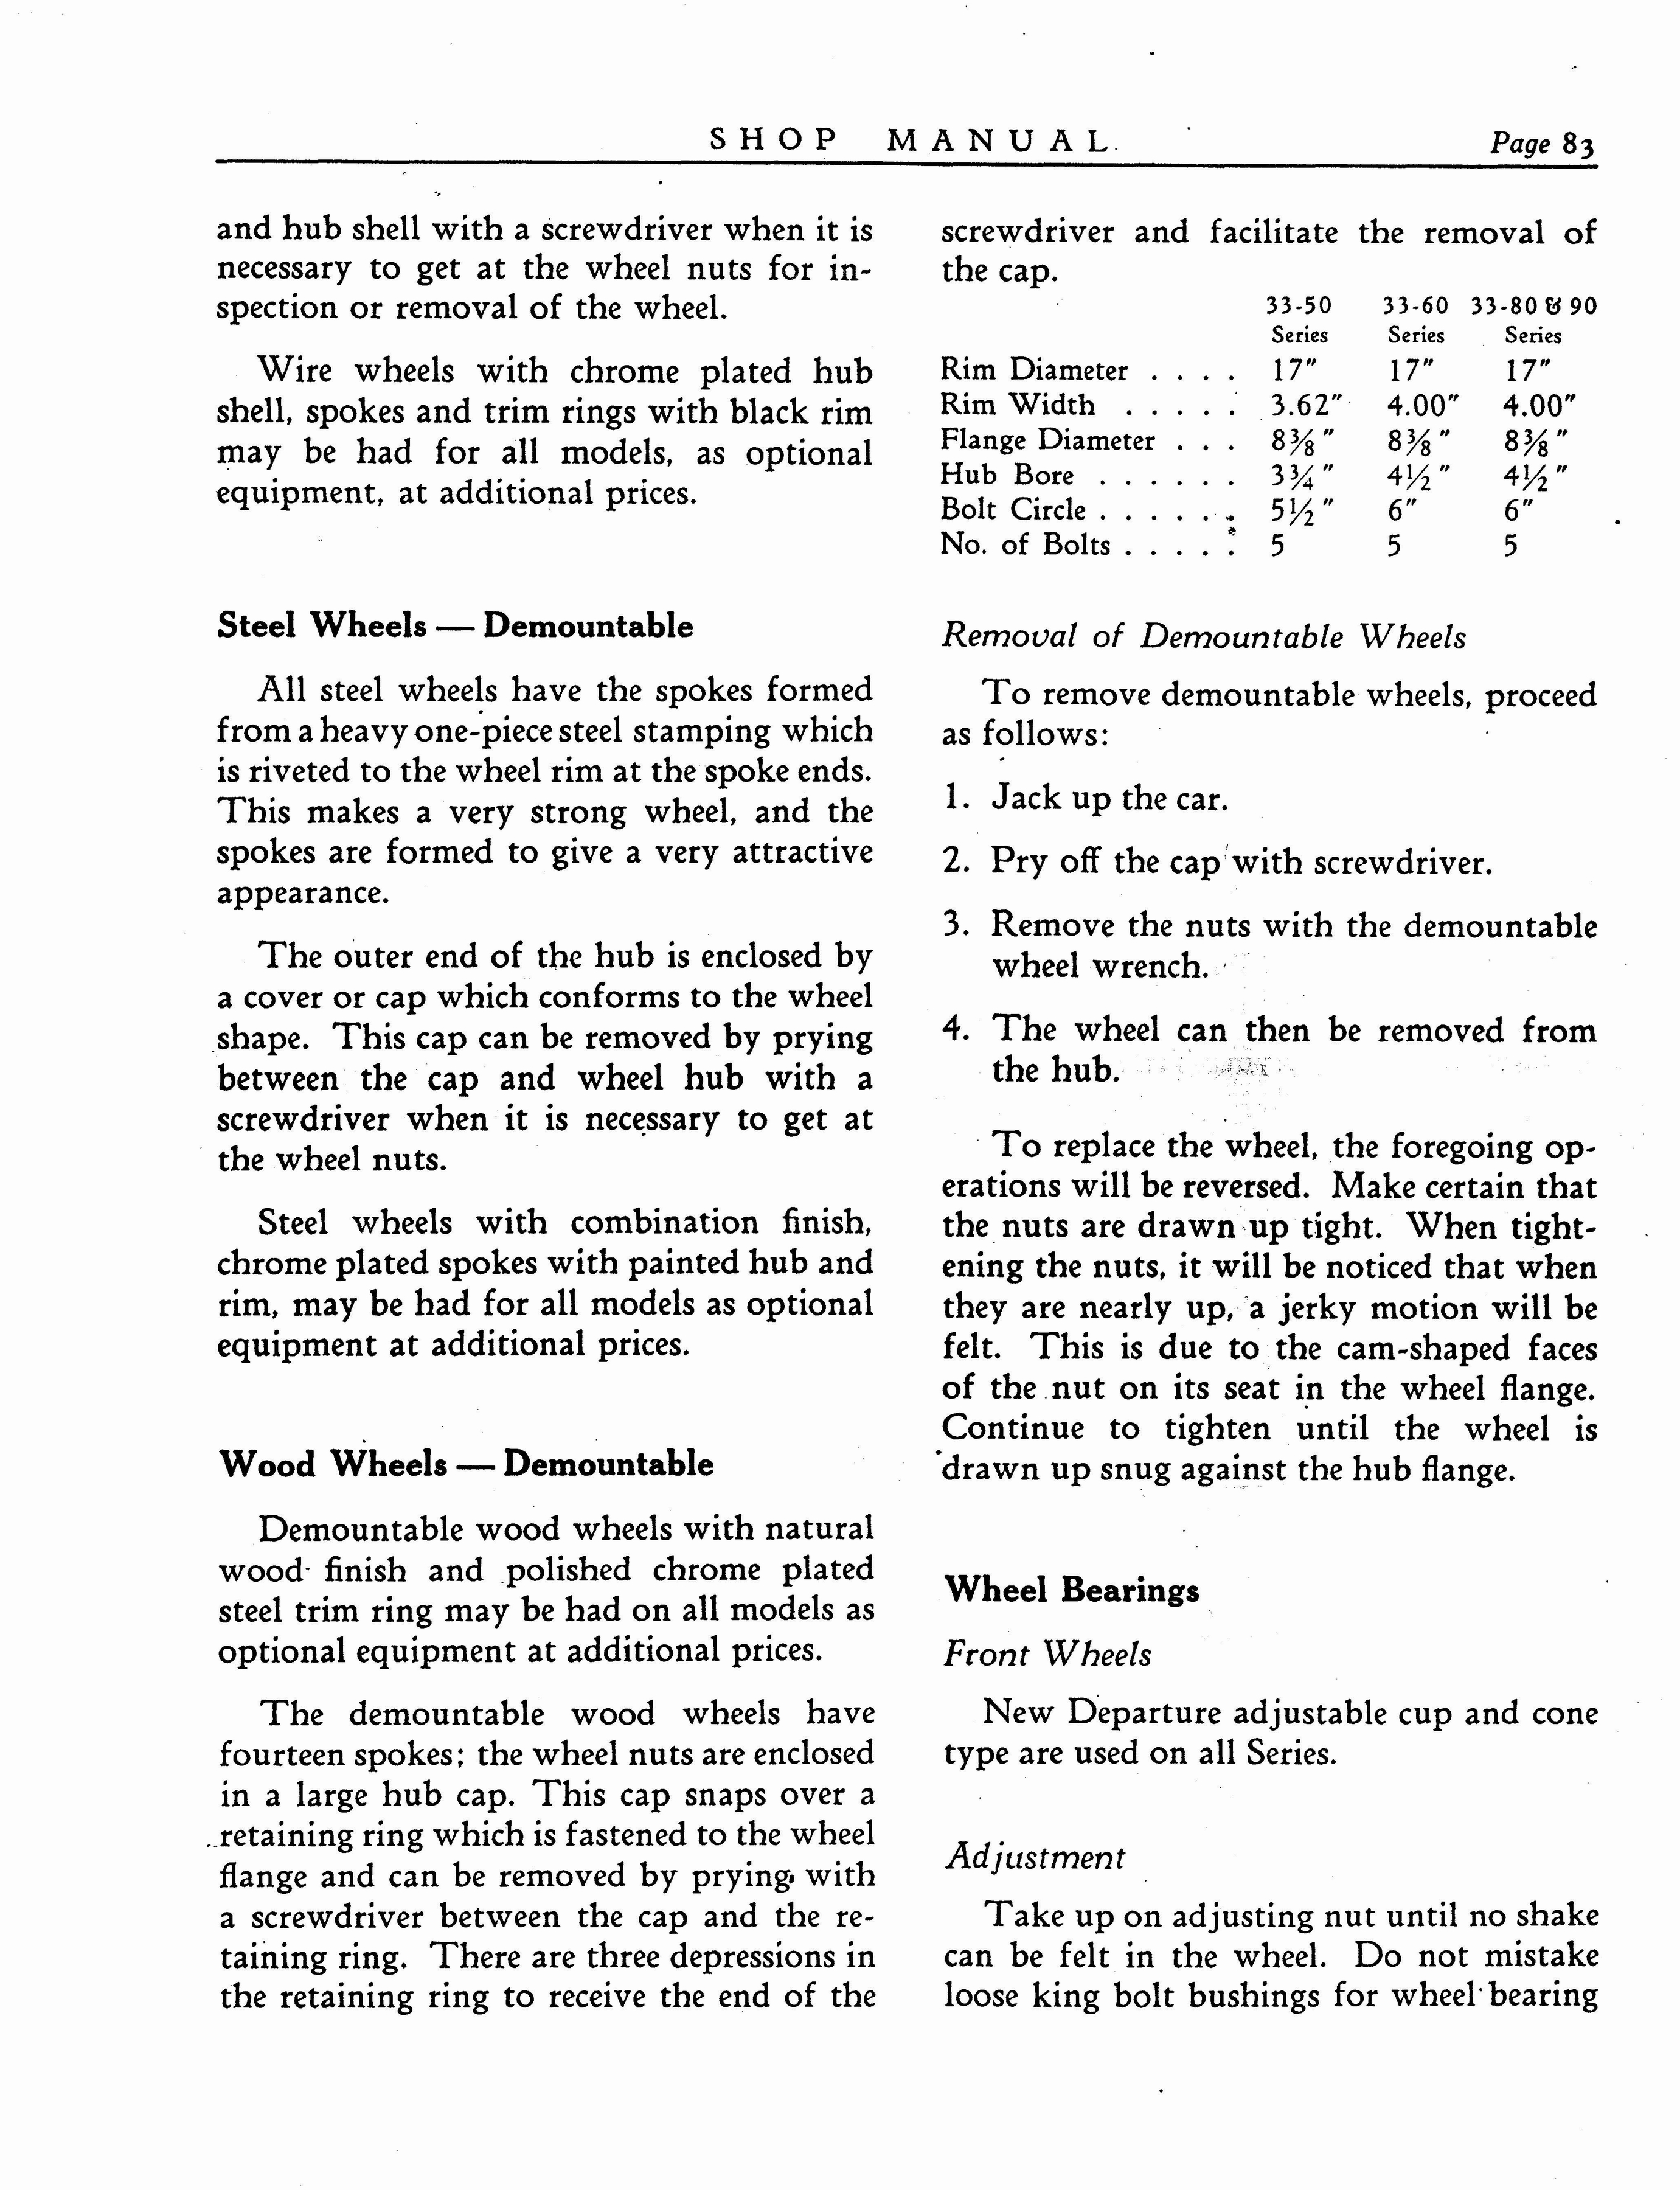 n_1933 Buick Shop Manual_Page_084.jpg